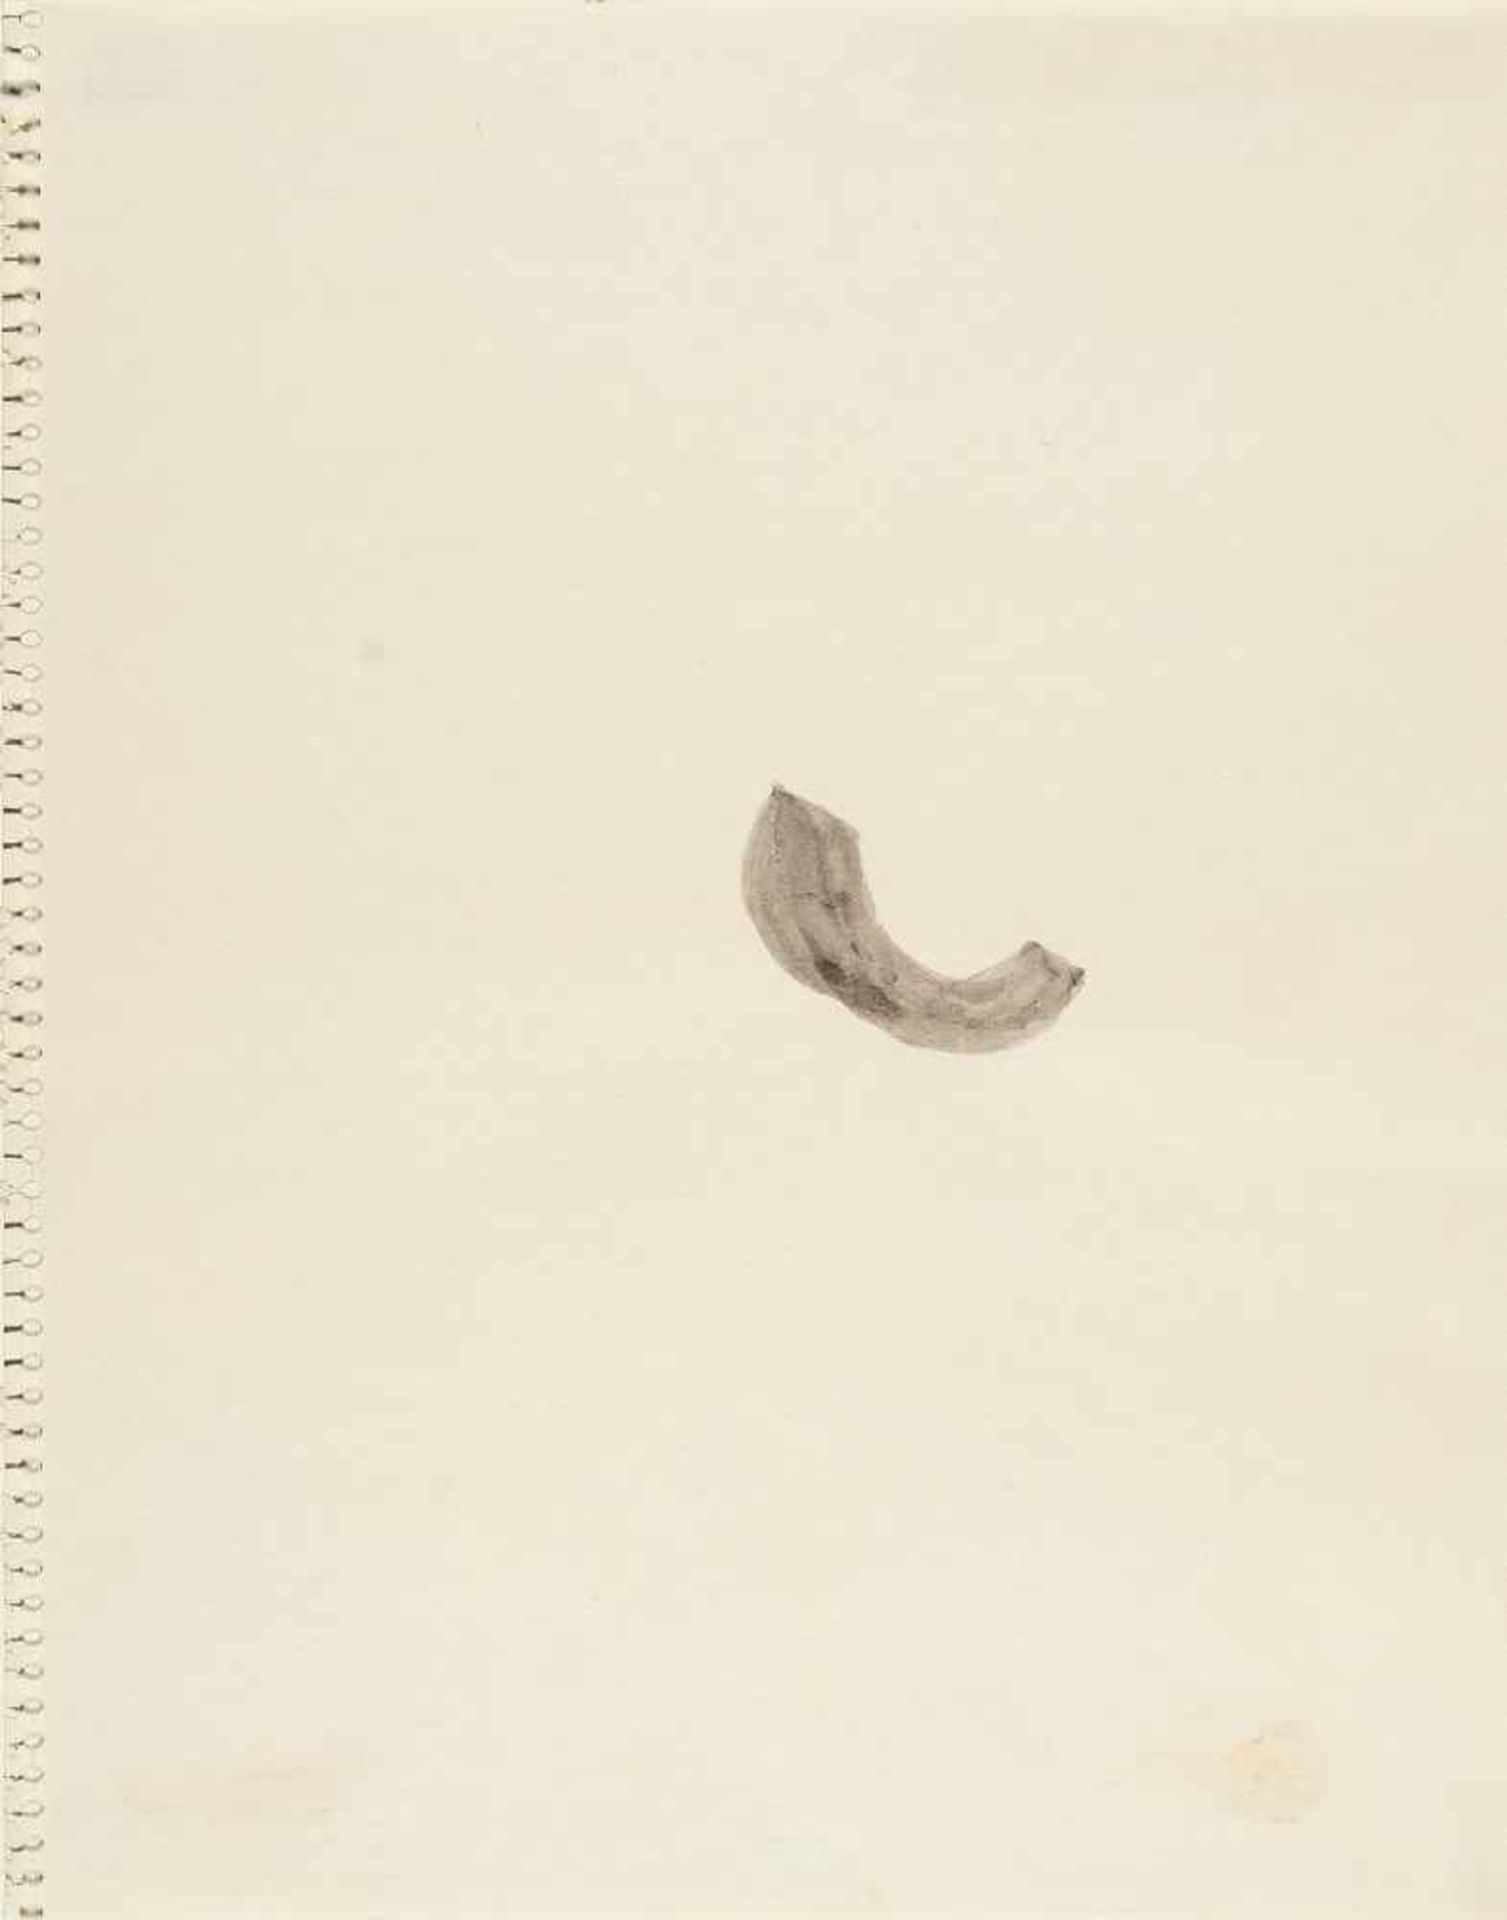 Richard Tuttle1941 Rahway/New JerseyOhne Titel (graue amorphe Form)Aquarell auf Velin. 1973. Ca.